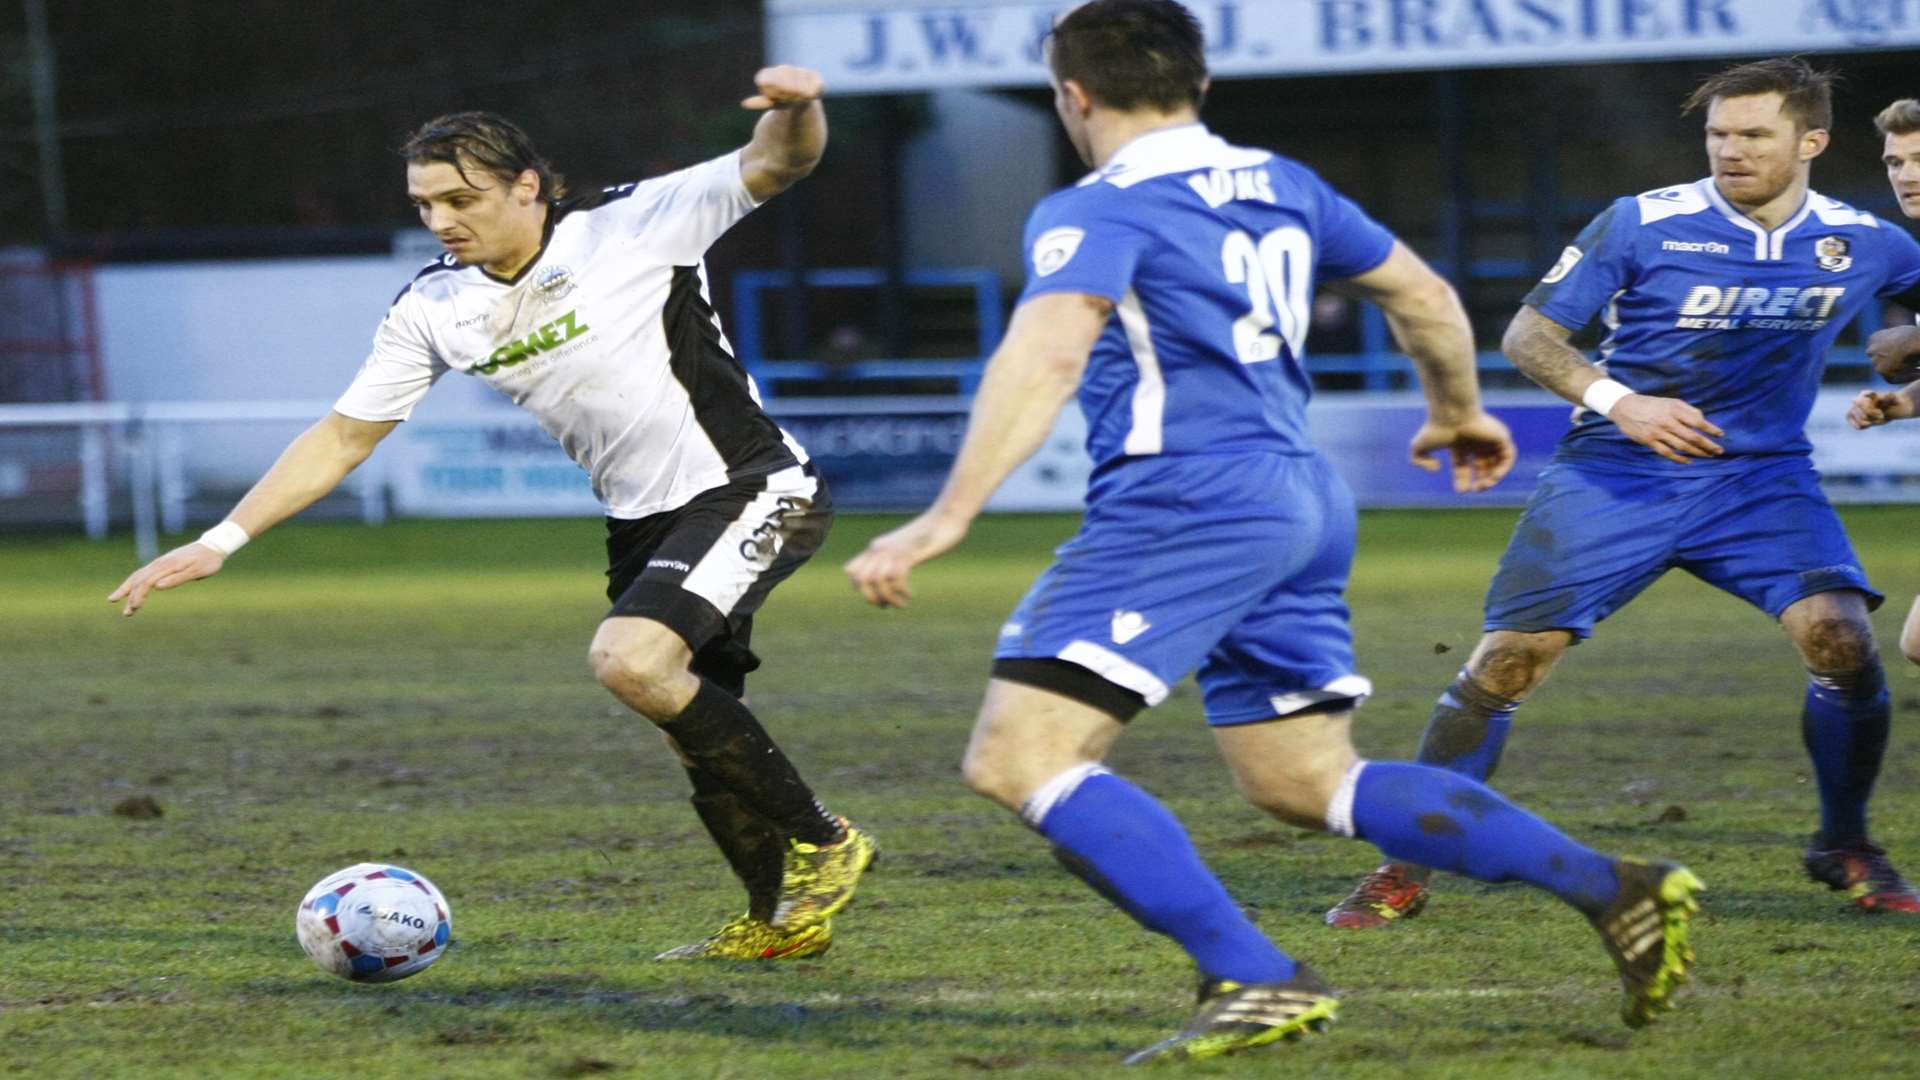 Dover midfielder Liam Bellamy broke two bones in his hand at Woking on Saturday.